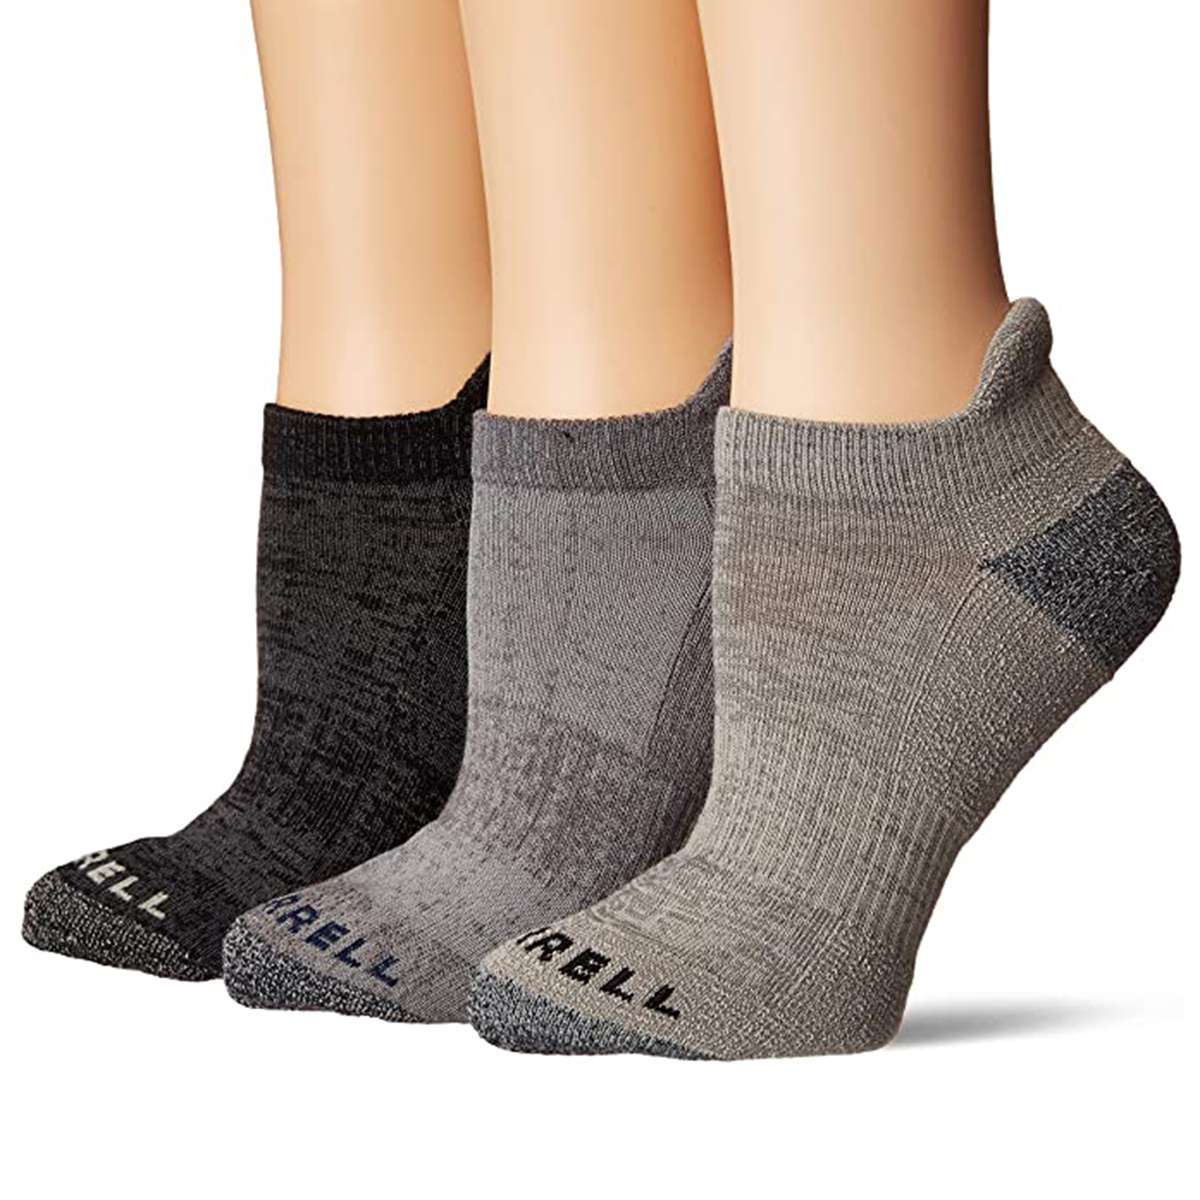 Merrell Women's 3 Pack Cushioned Performance Hiker Socks